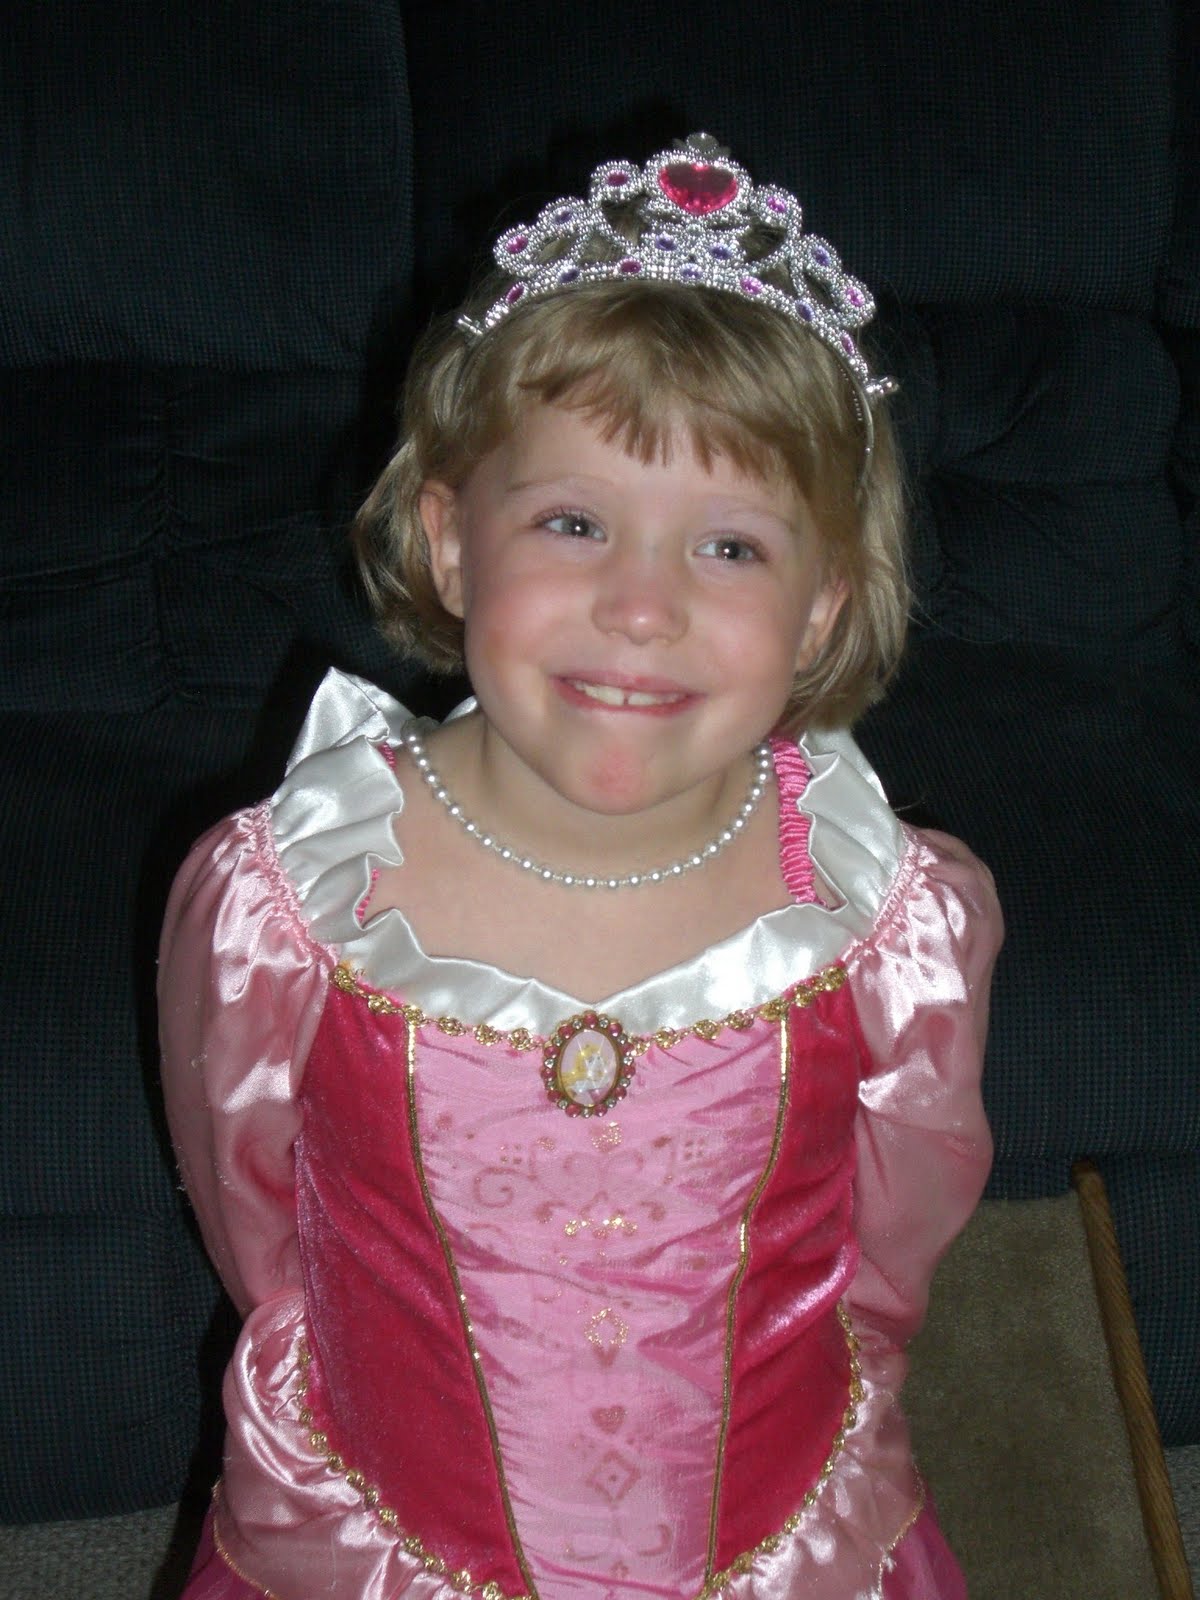 Our Family's Journey: Princess Natalie